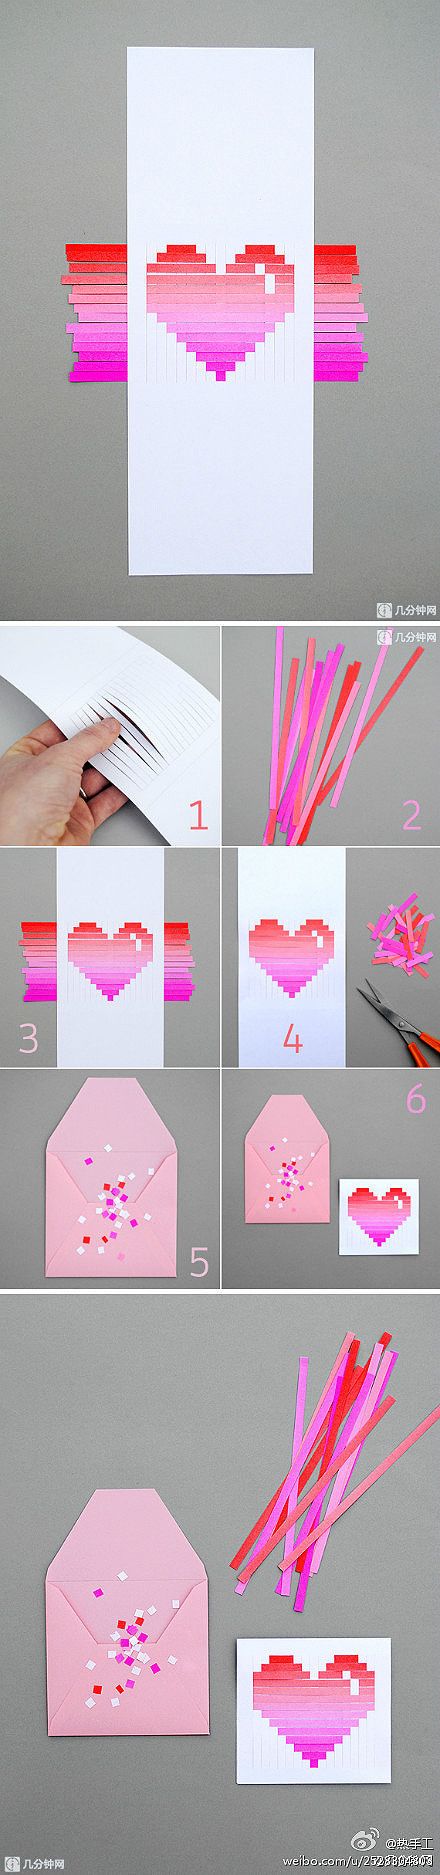 diseños de sobres de cartas para San Valentin